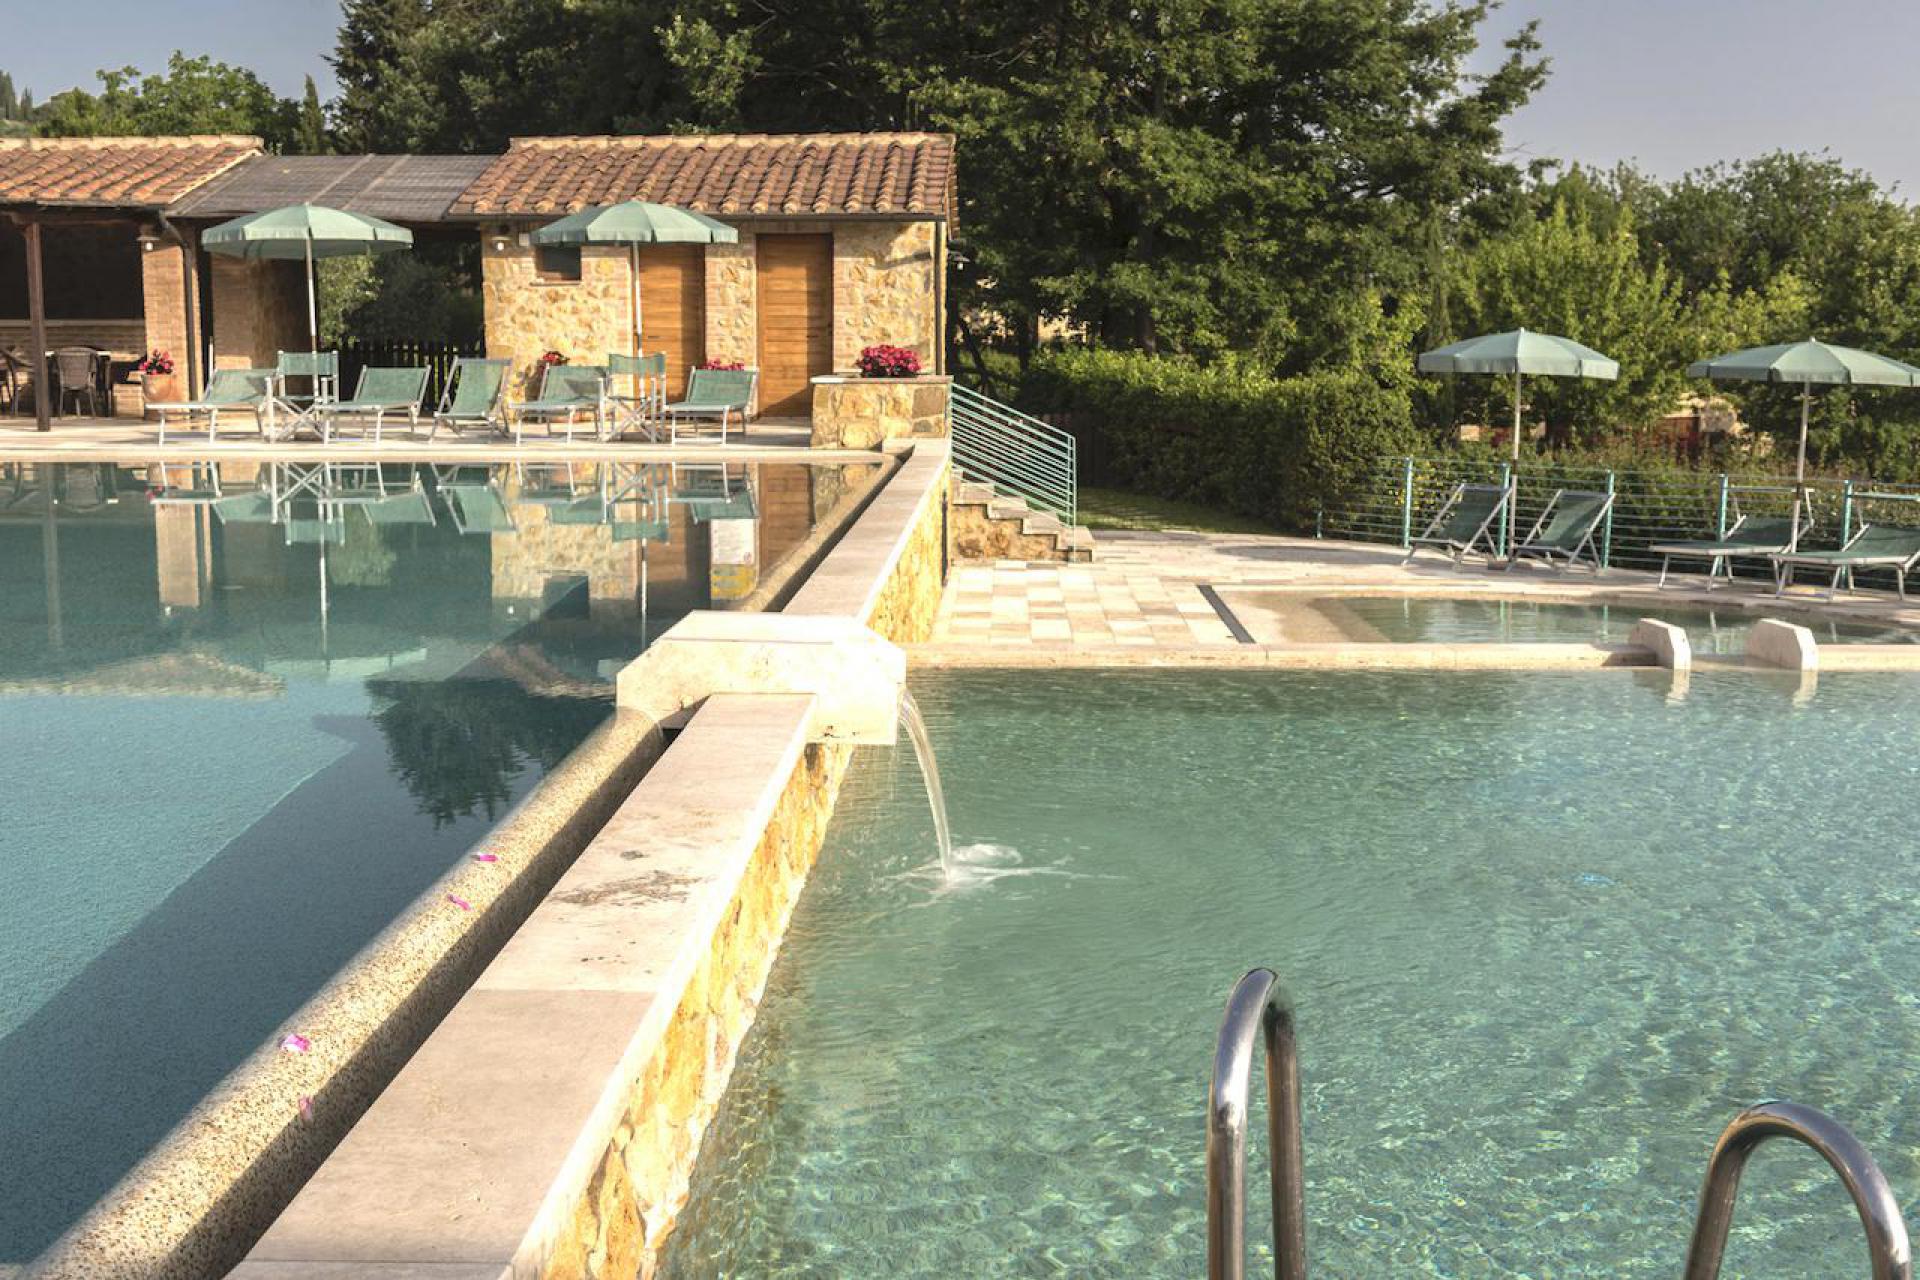 Agriturismo Toscane Agriturismo Country Resort Toscane met mooi zwembad en Restaurant